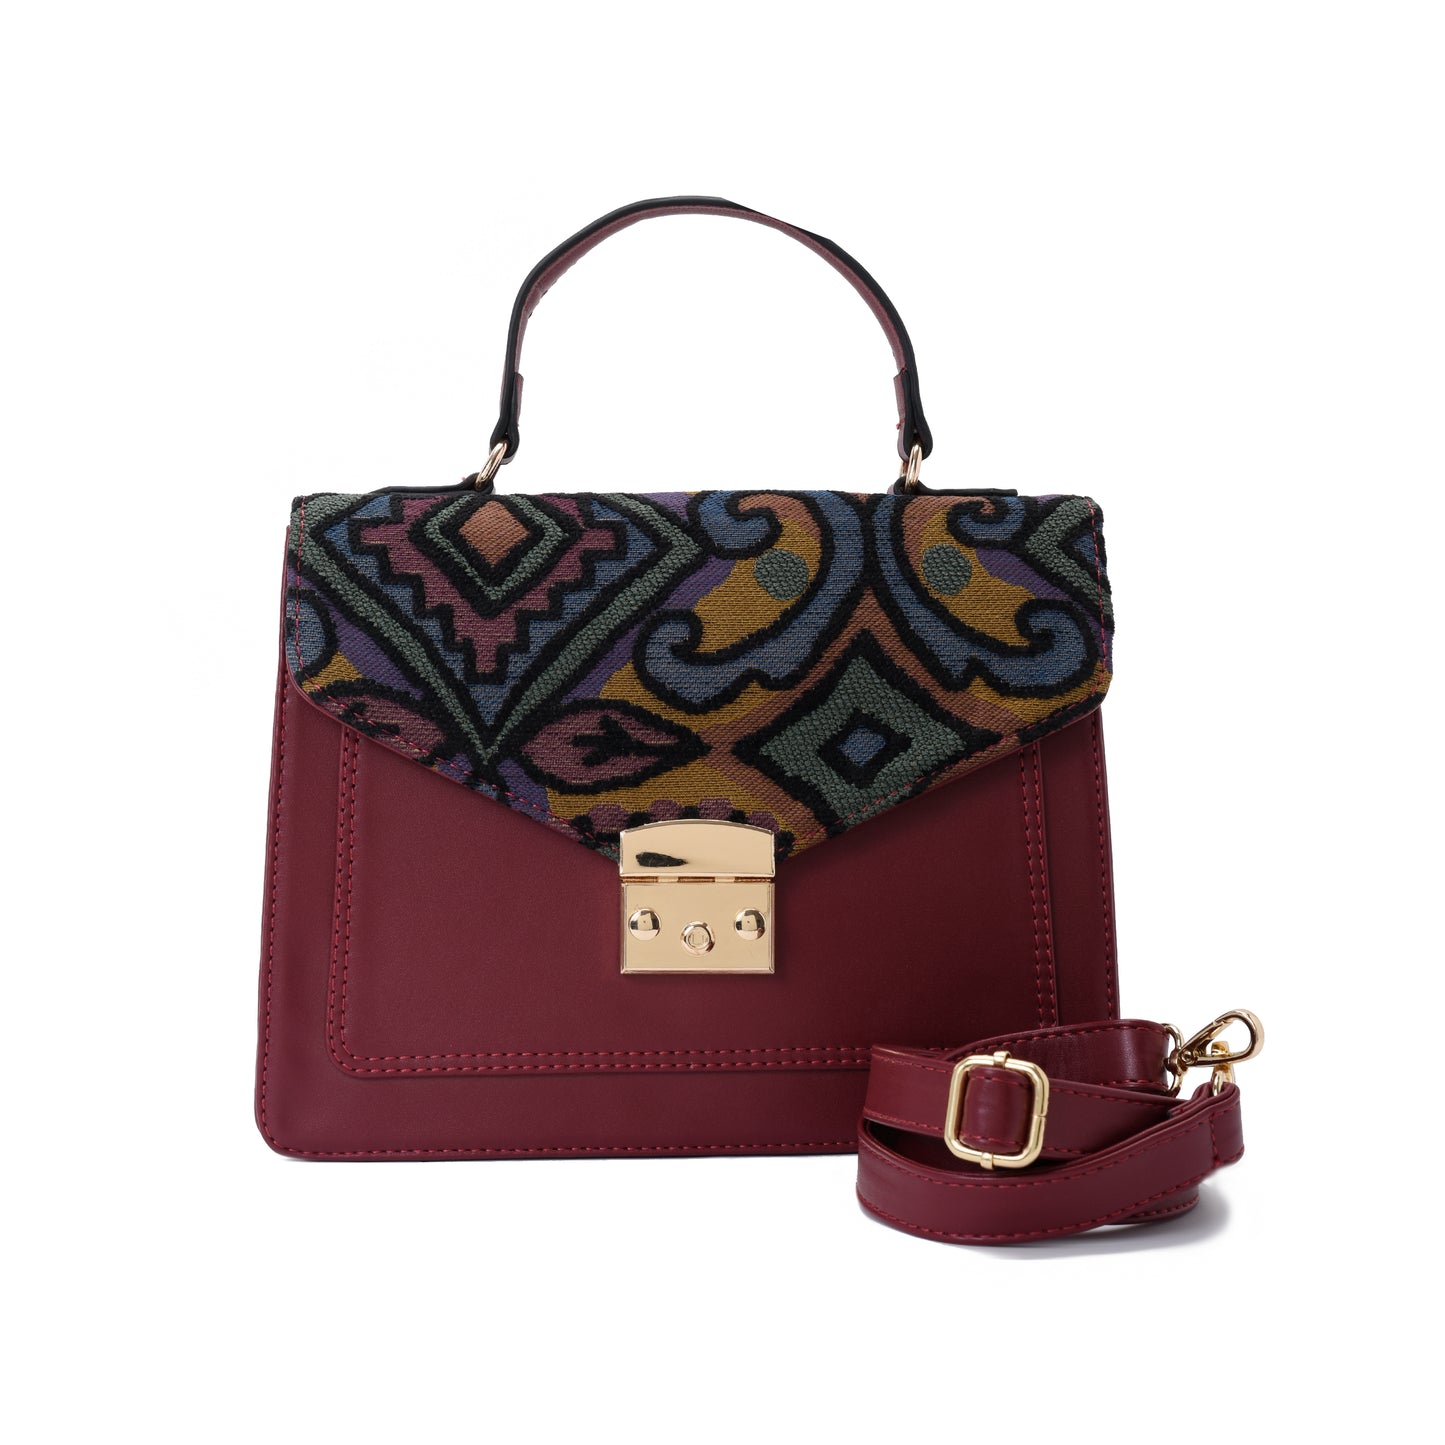 Burgandy Handbag with Colorful fabric- Code 905